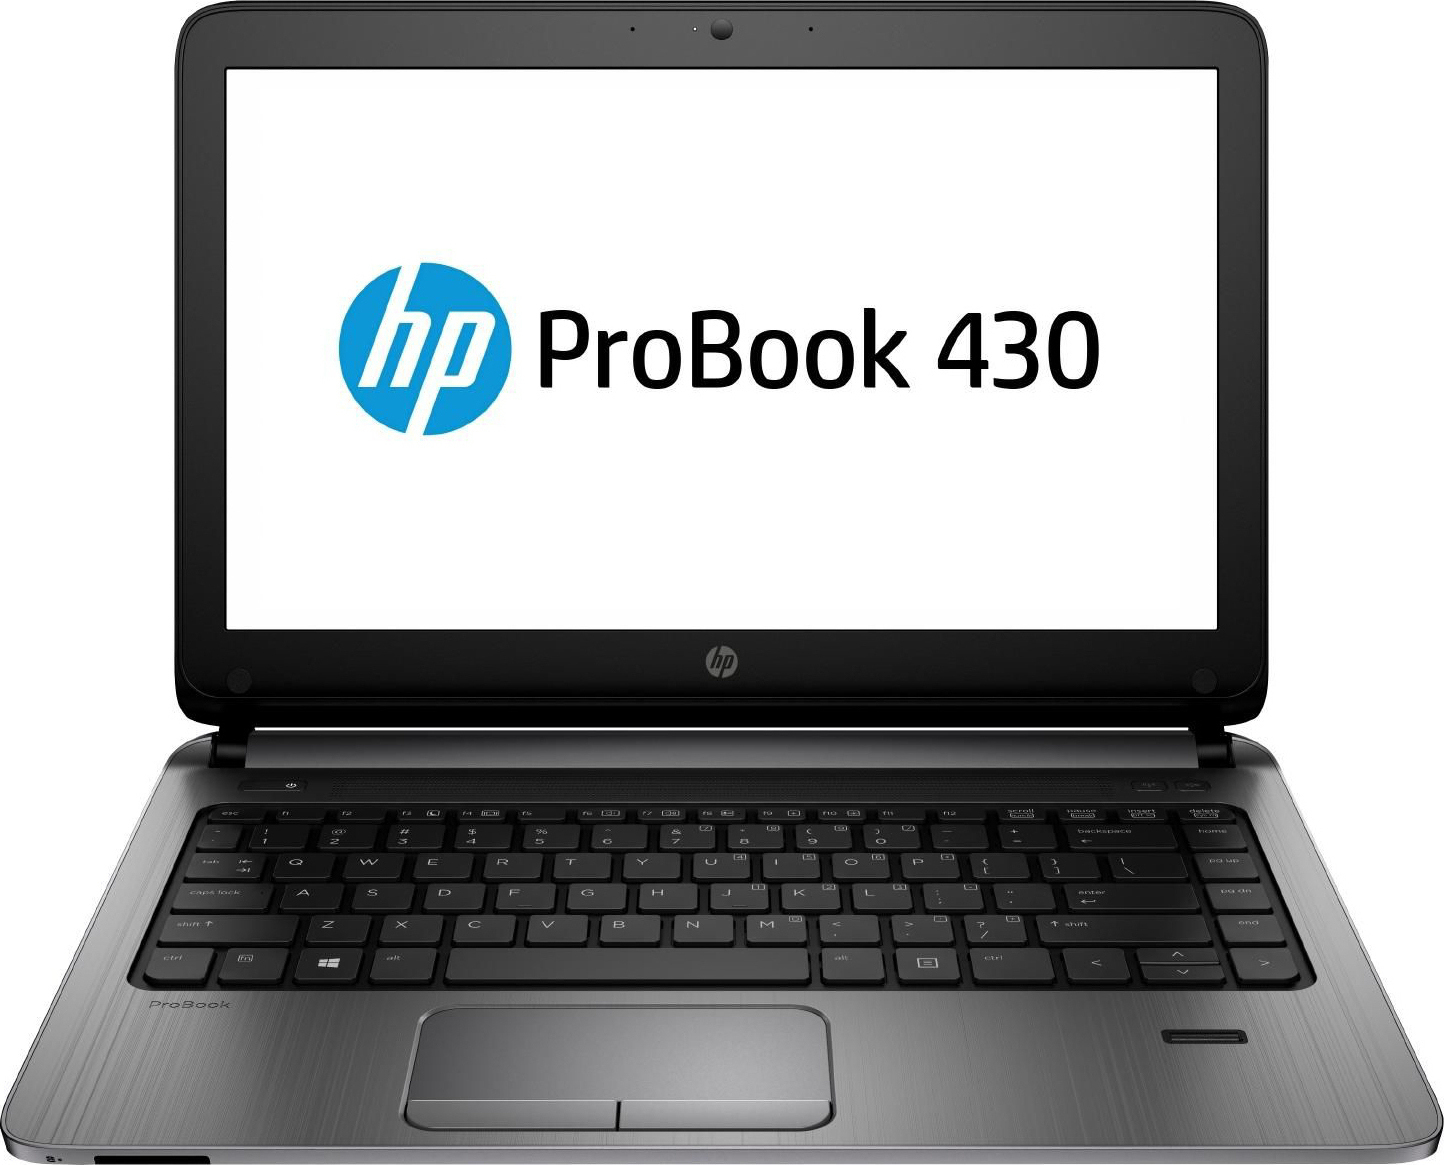 HP ProBook 430 G3 (i5-6200U/4GB/128GB/W7) - Skroutz.gr